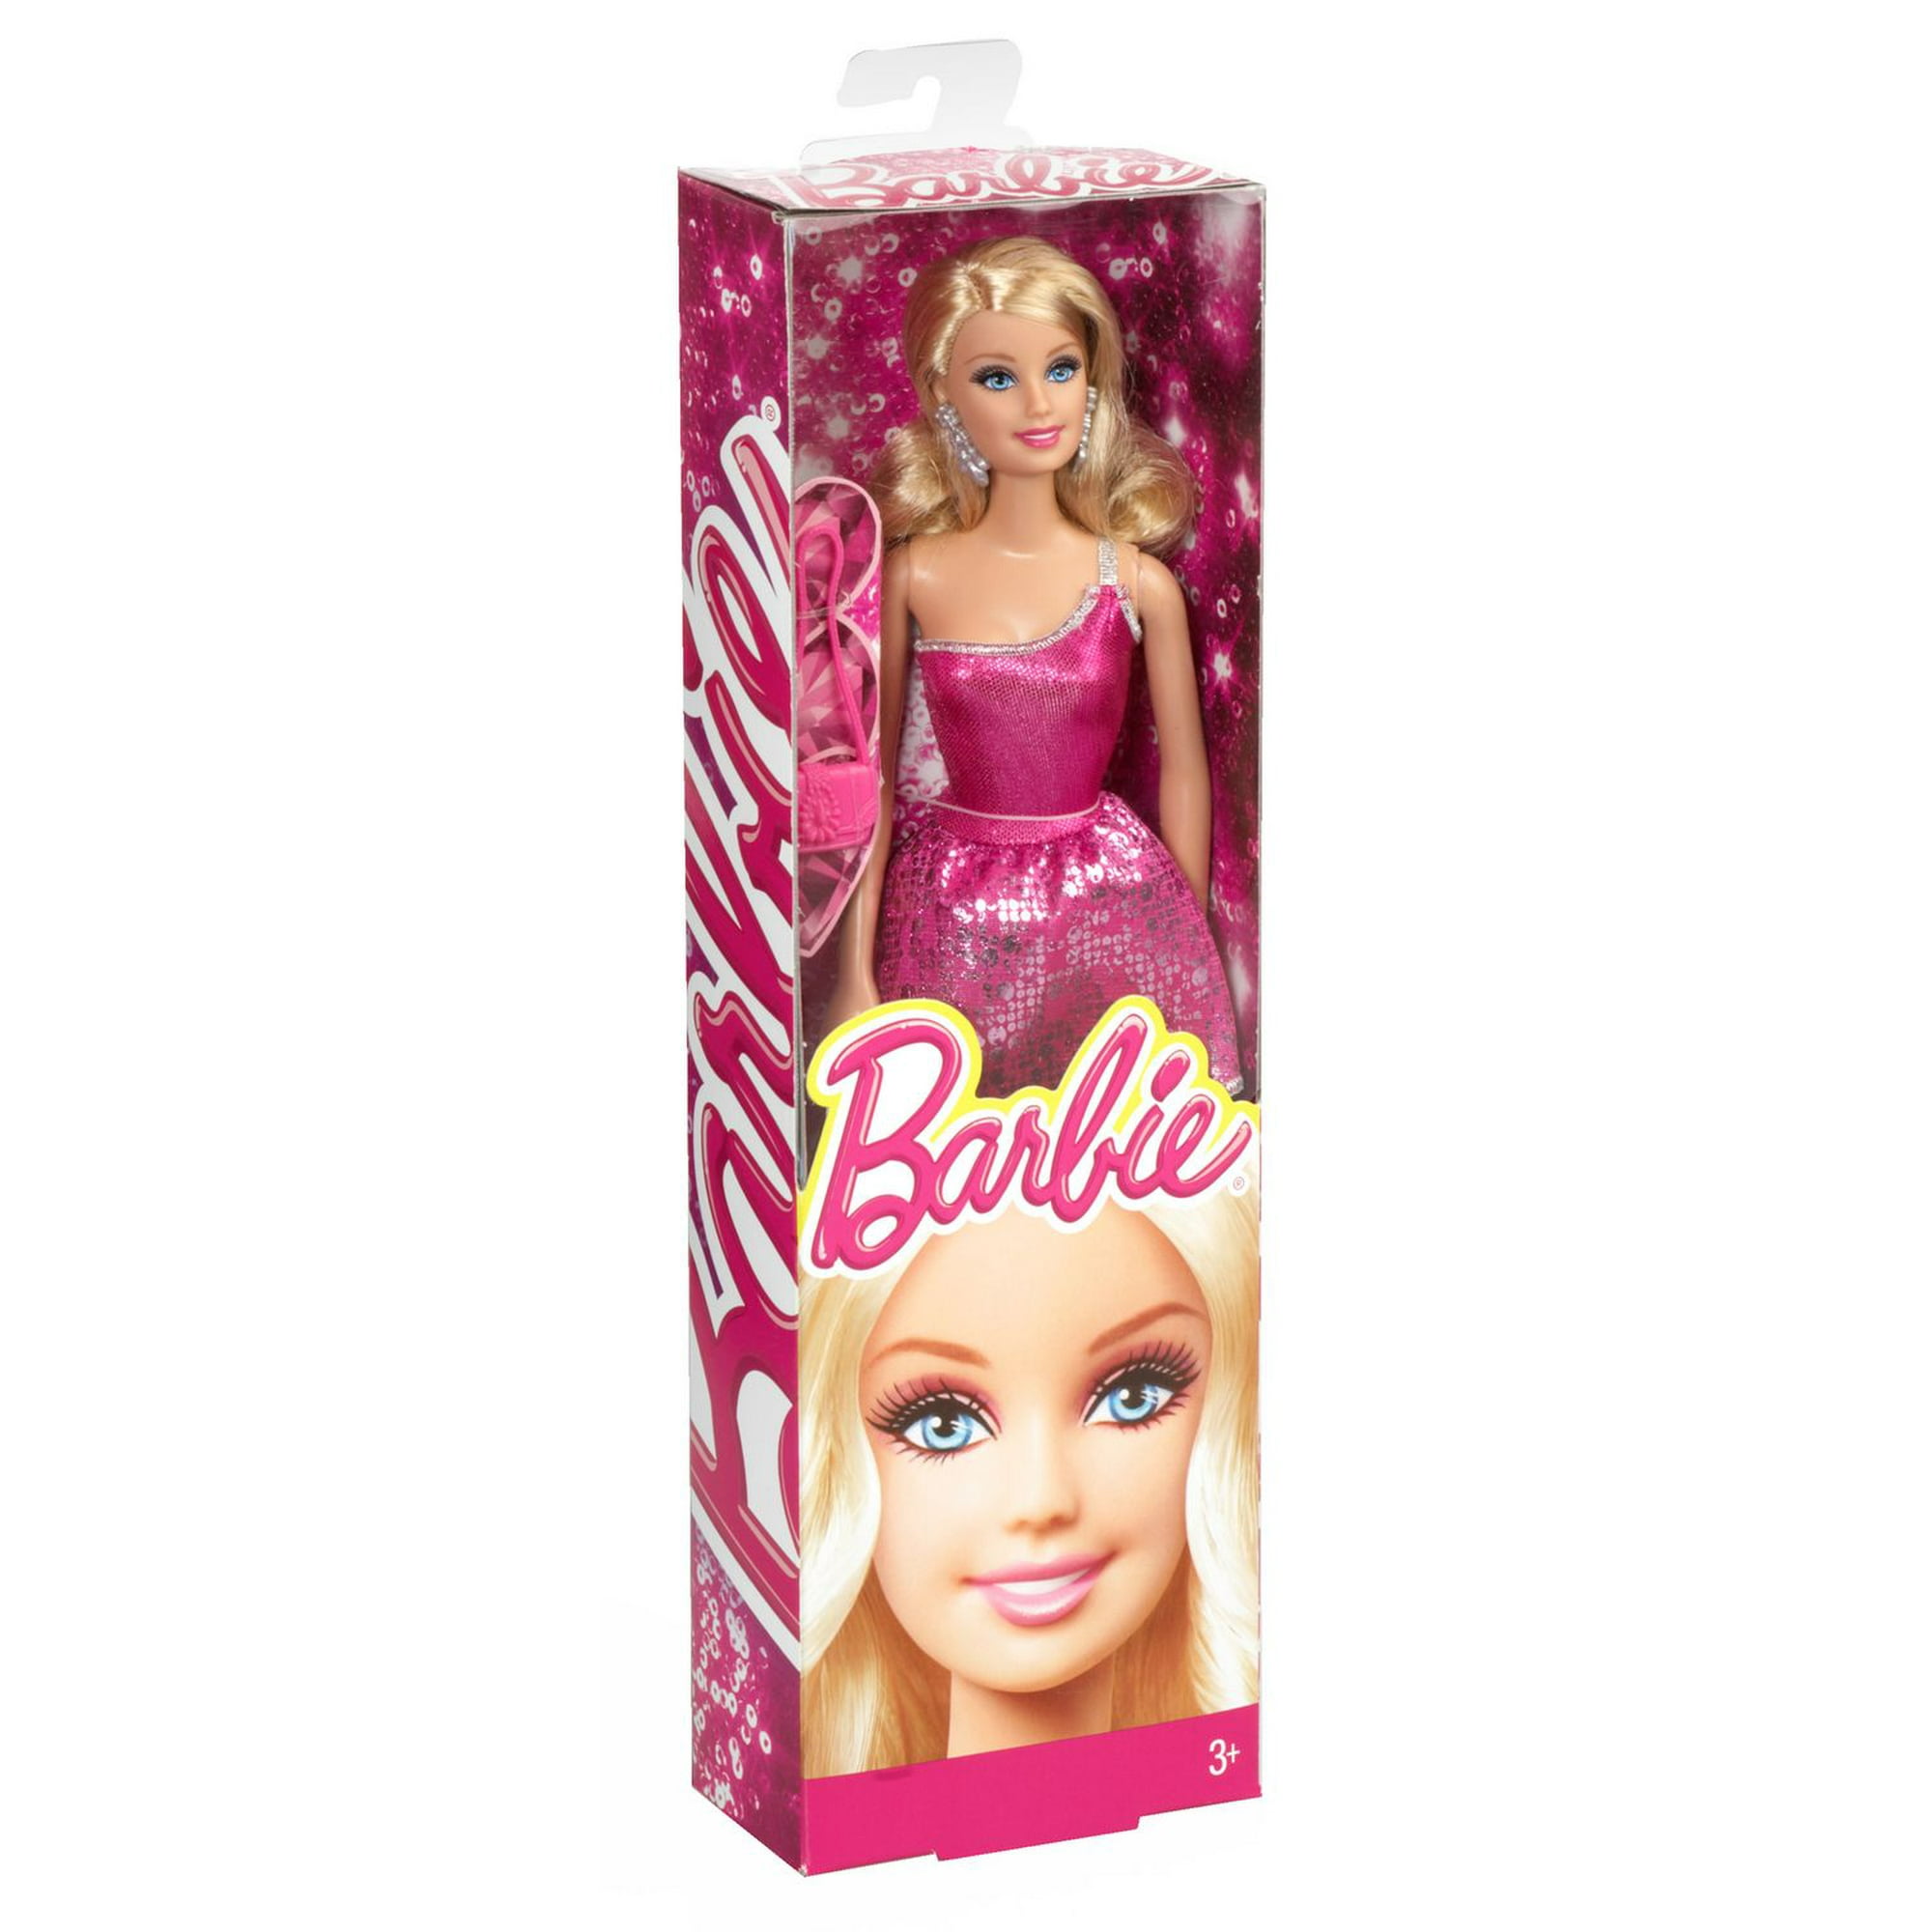 Barbie Pink Bedroom Bath Morning Routine - Princess Doll Dancing